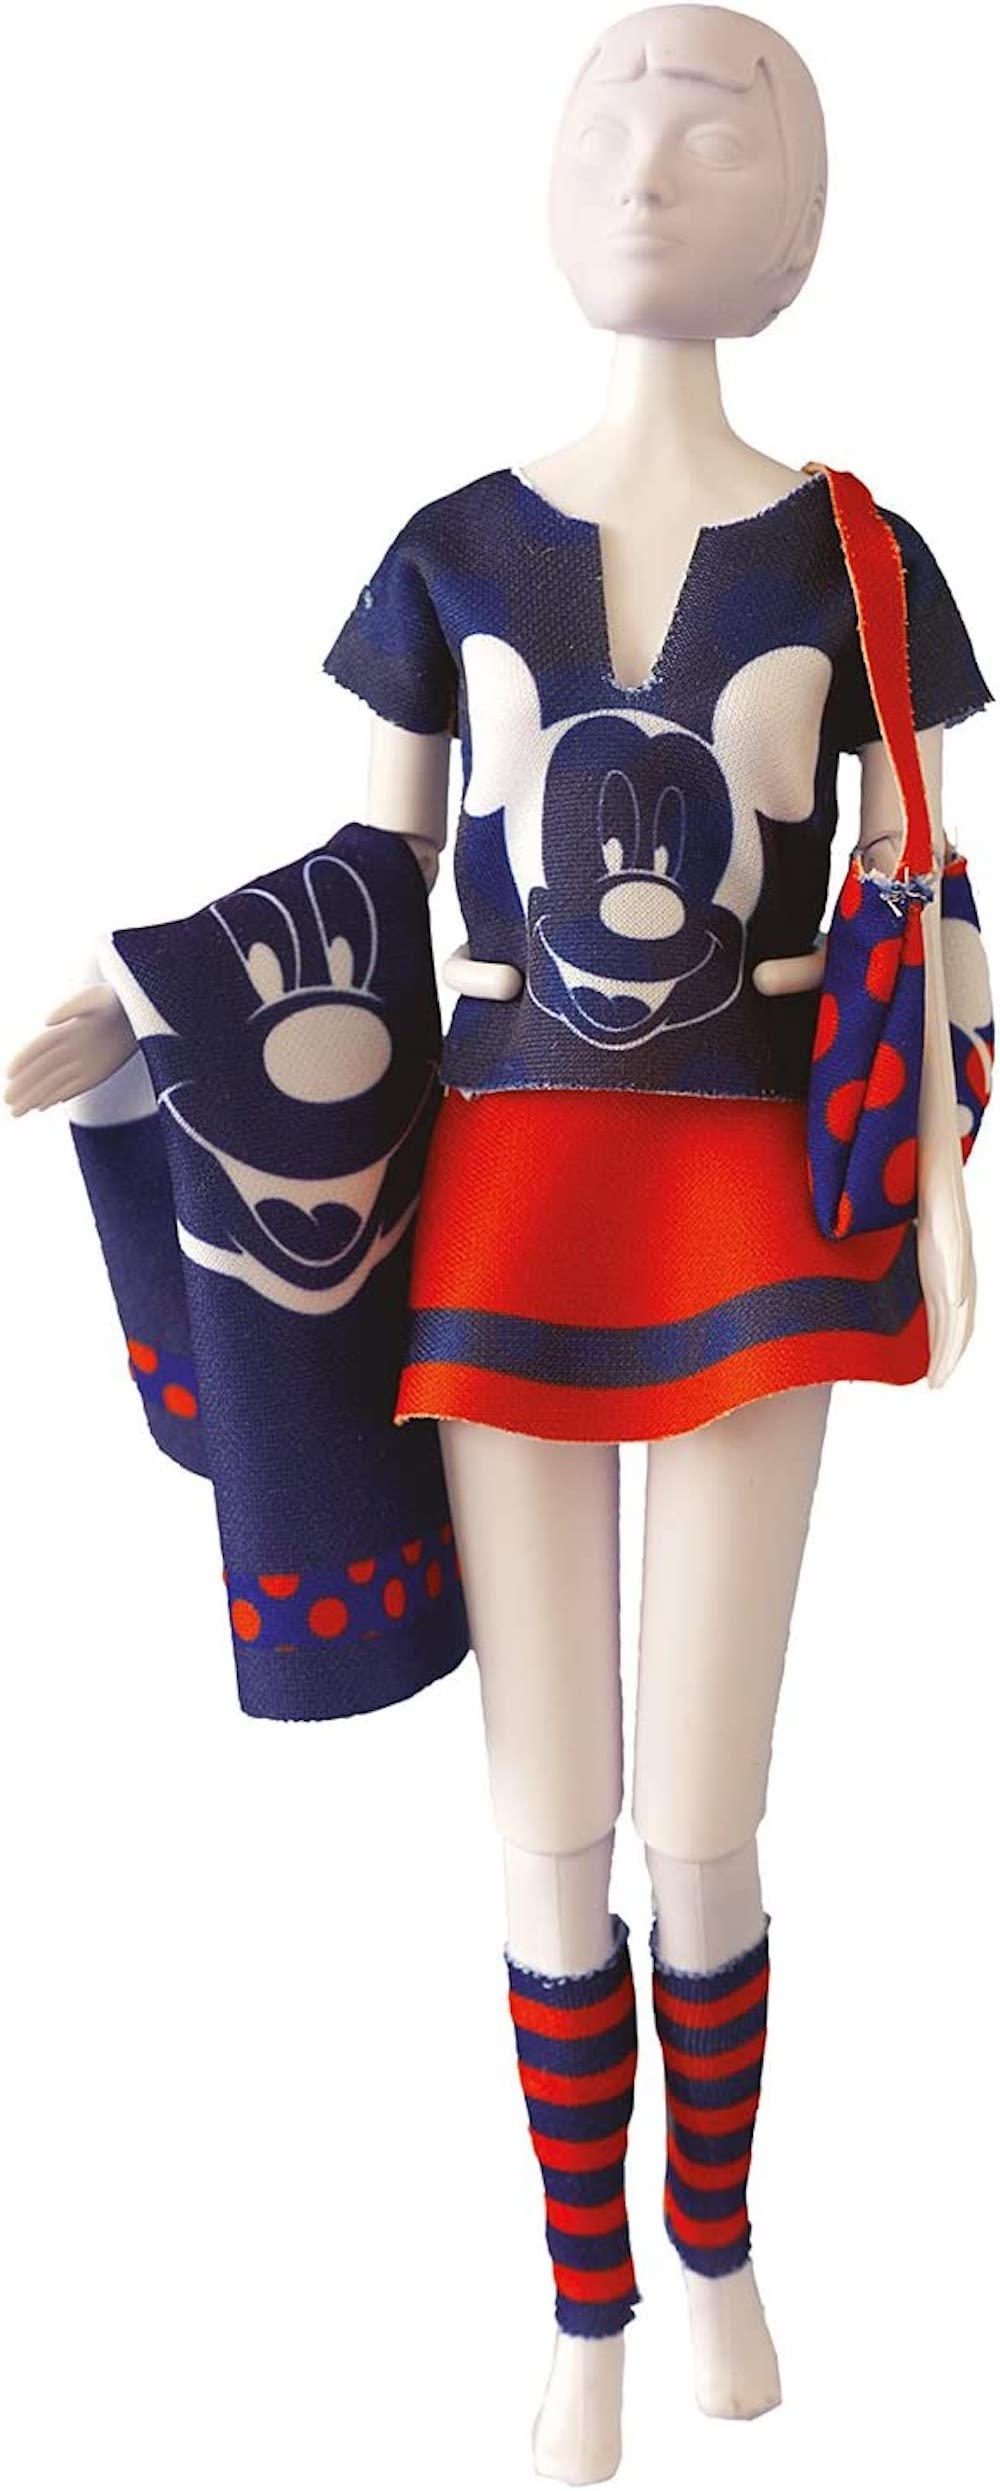 Dress your Doll  Nähe selbst ein Outfit für Deine Mode Puppe!  29cm  Tiny Mickey Red&Blue